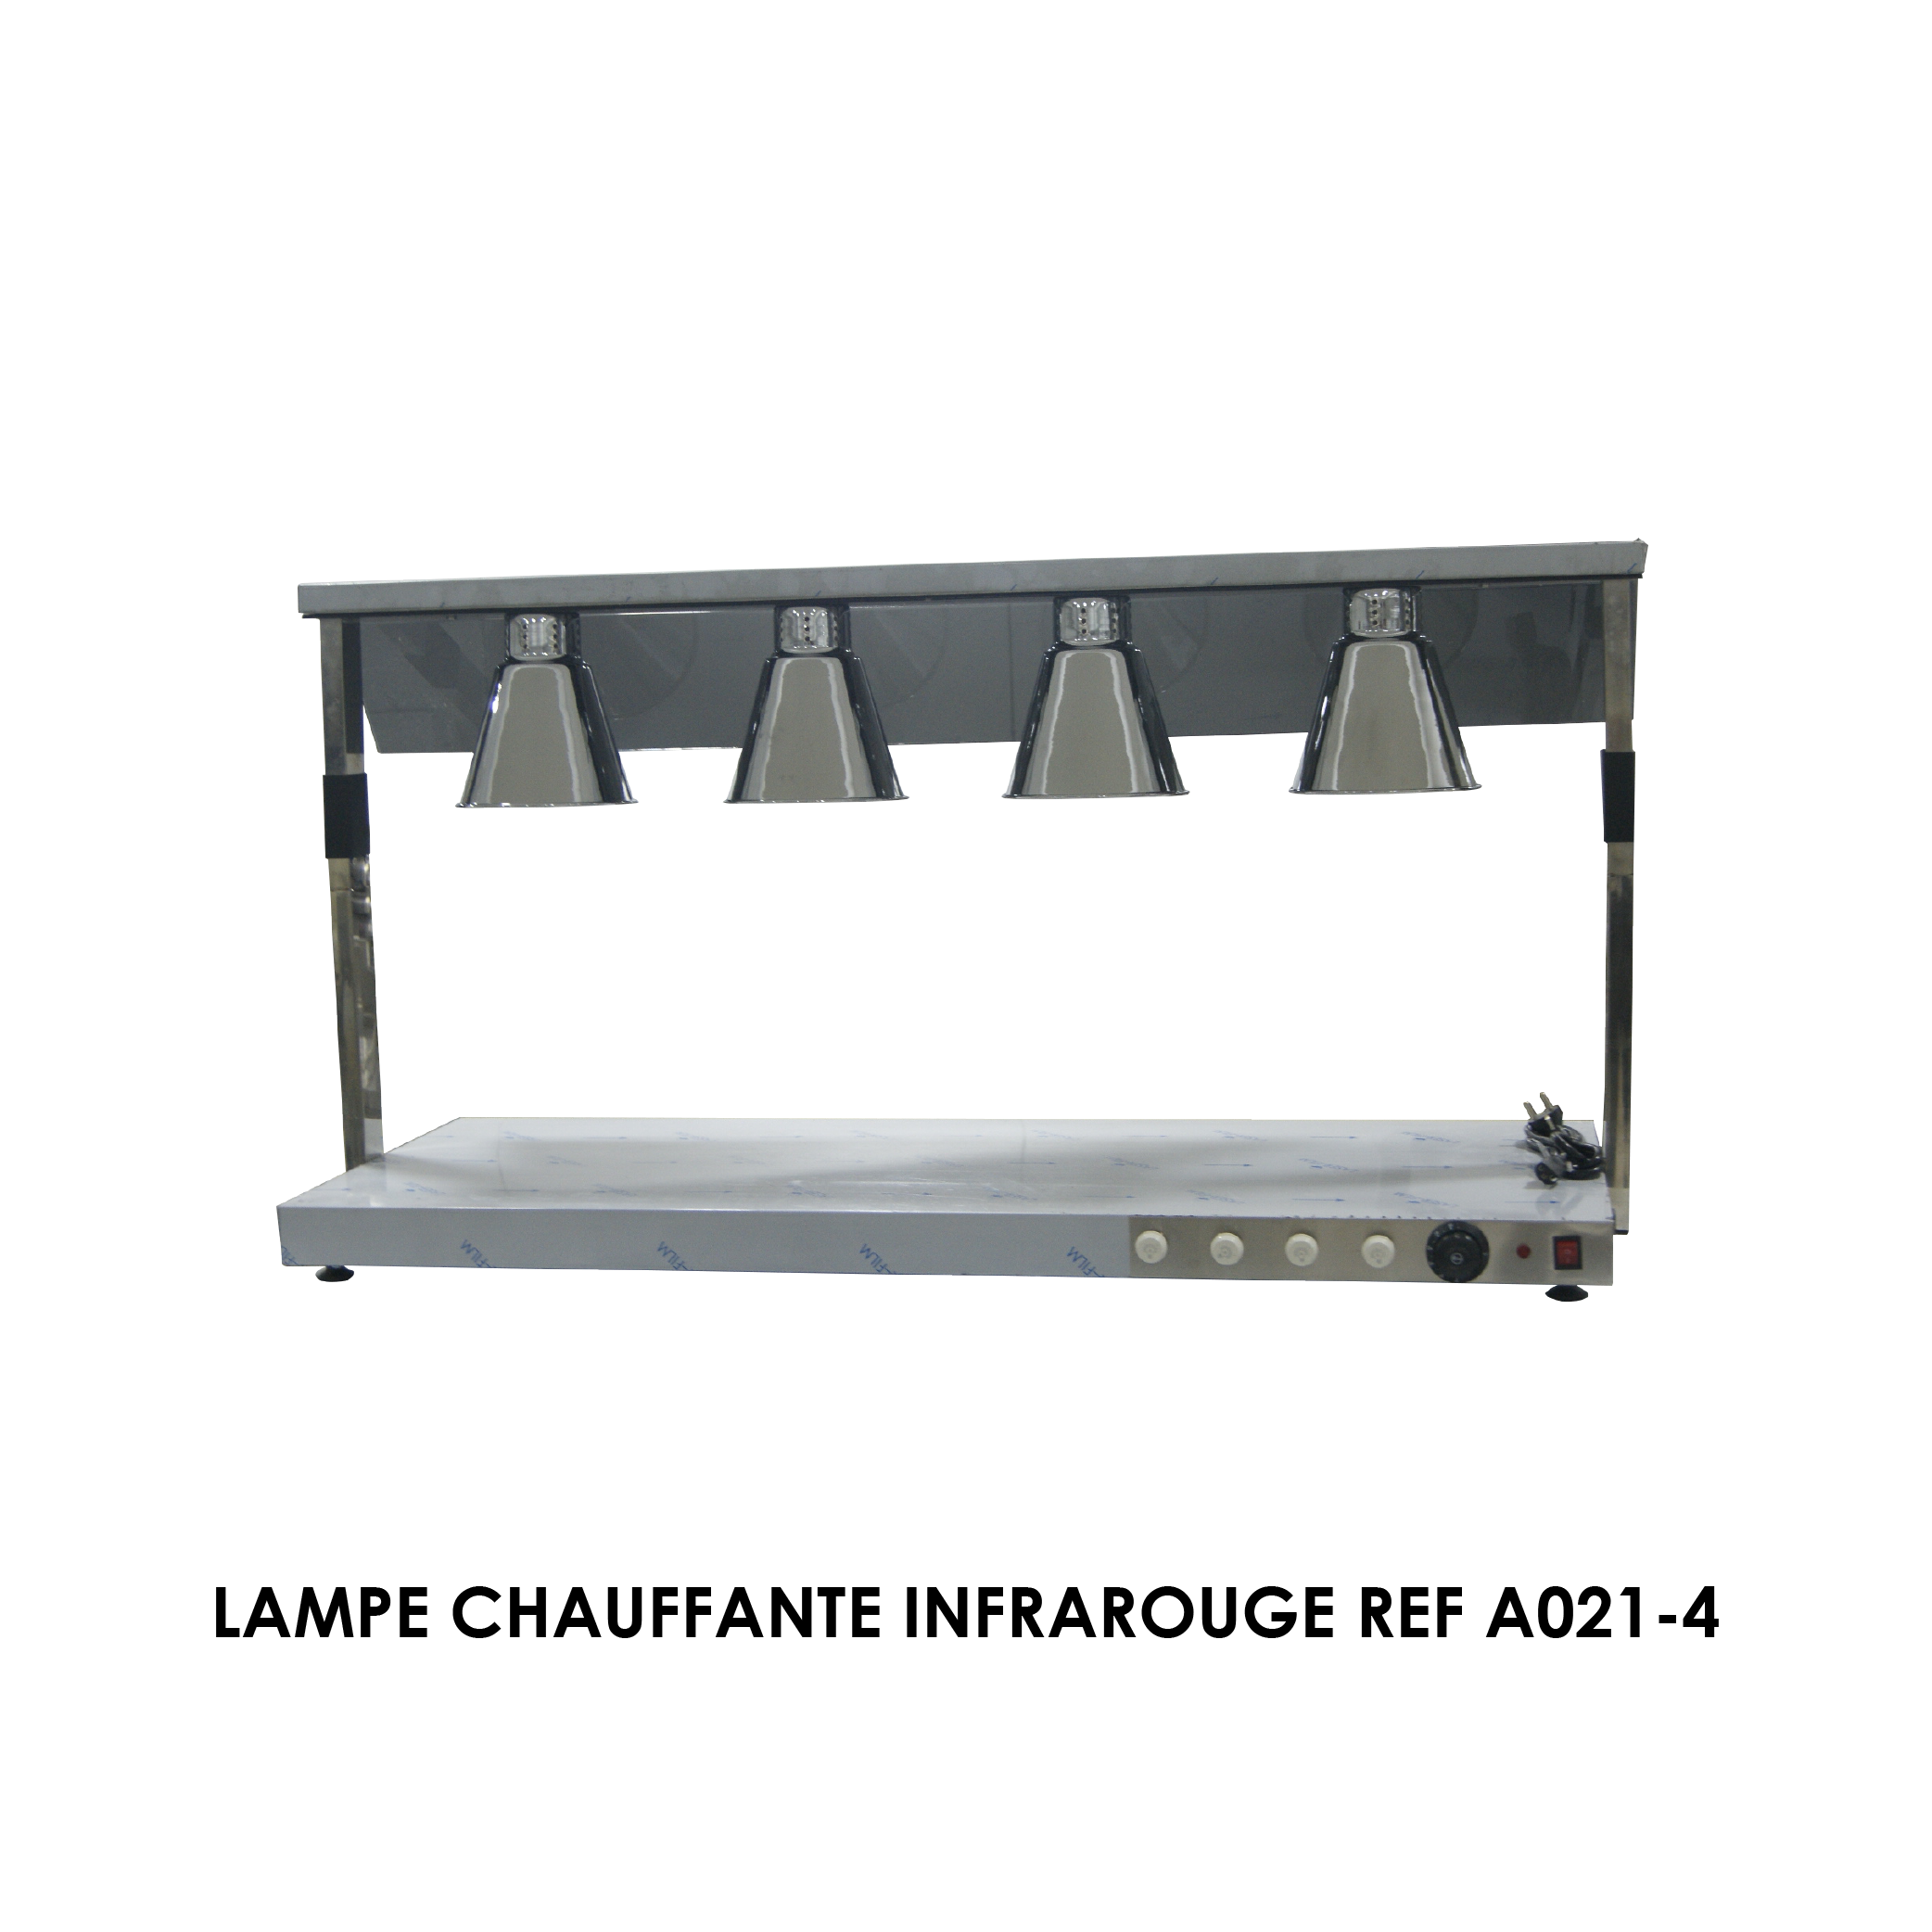 LAMPE CHAUFFANTE INFRAROUGE REF A021-4